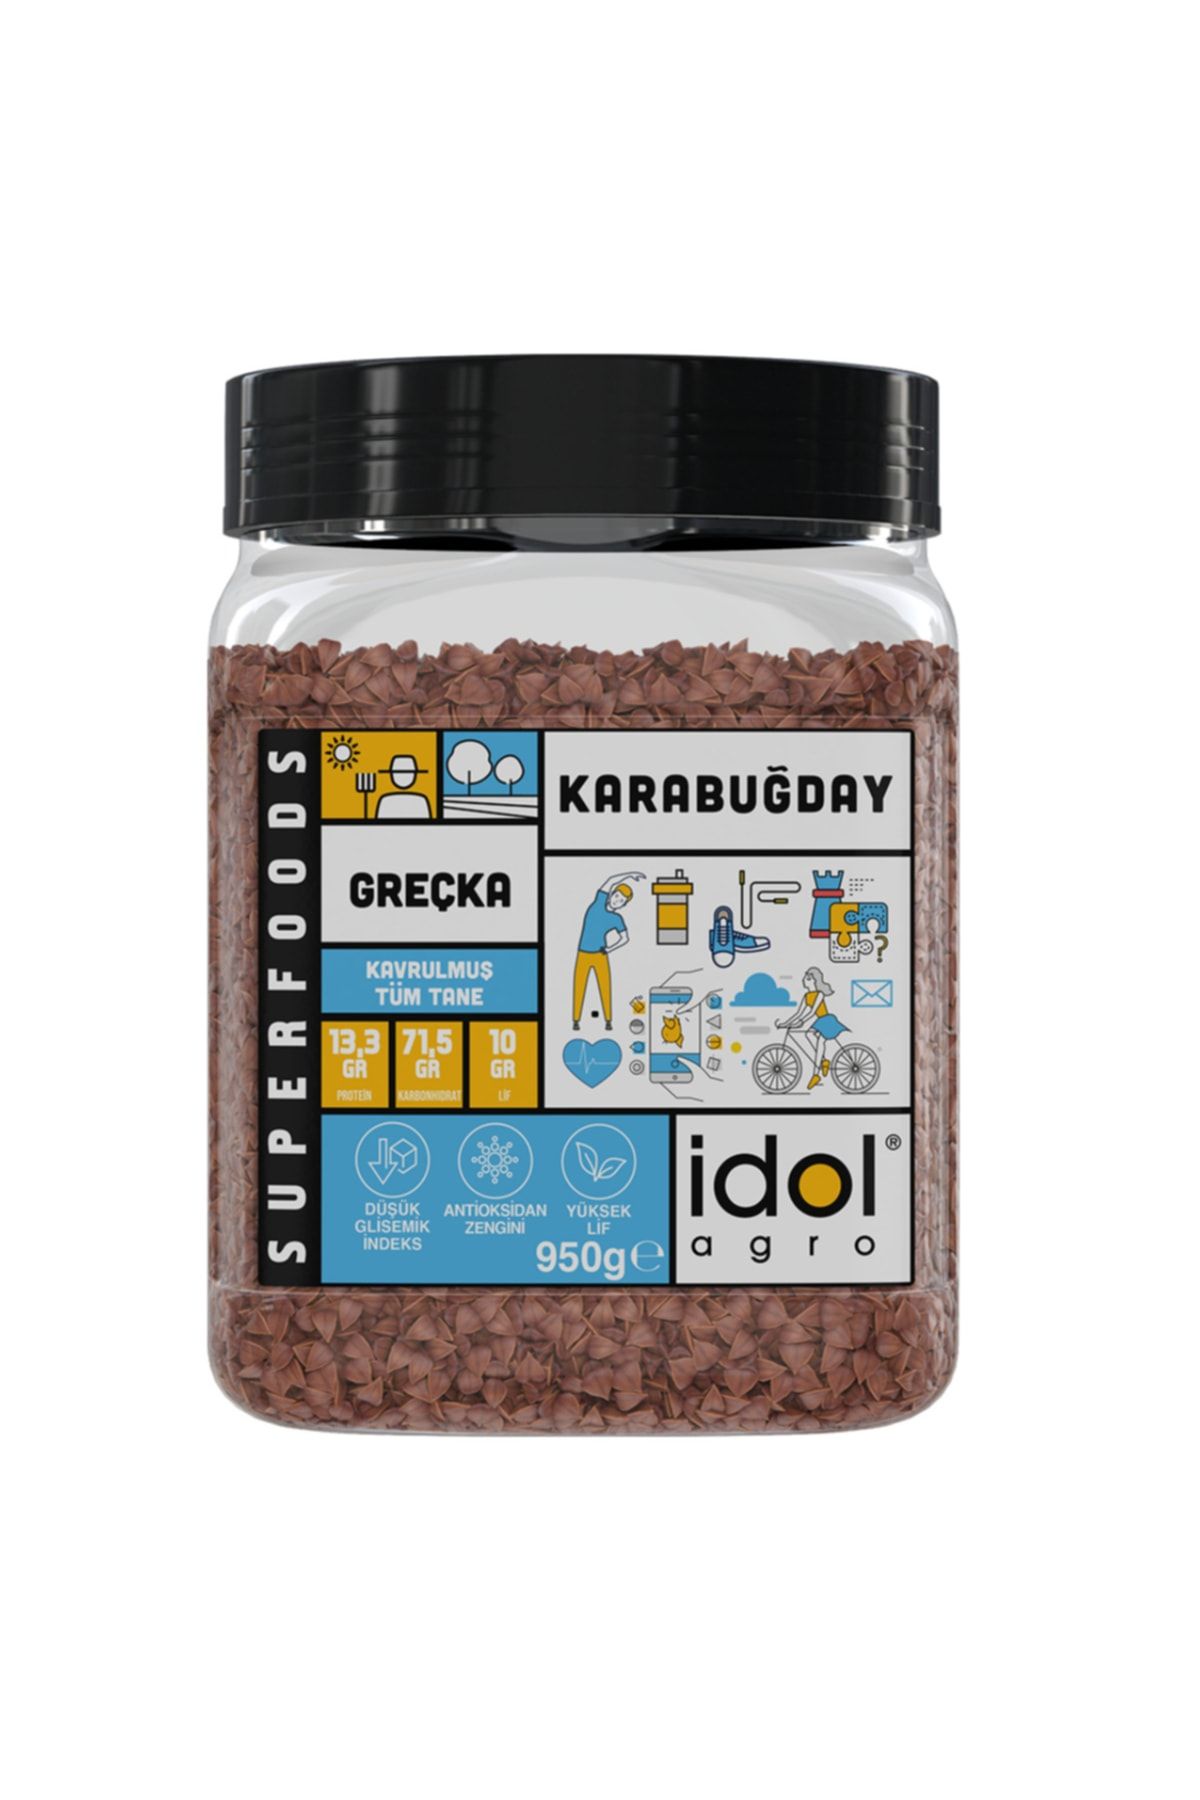 idolagro Karabuğday / Greçka - 950 gr - Superfoods - Düşük Gi, Yüksek Lif, Kavrulmuş Tüm Tane